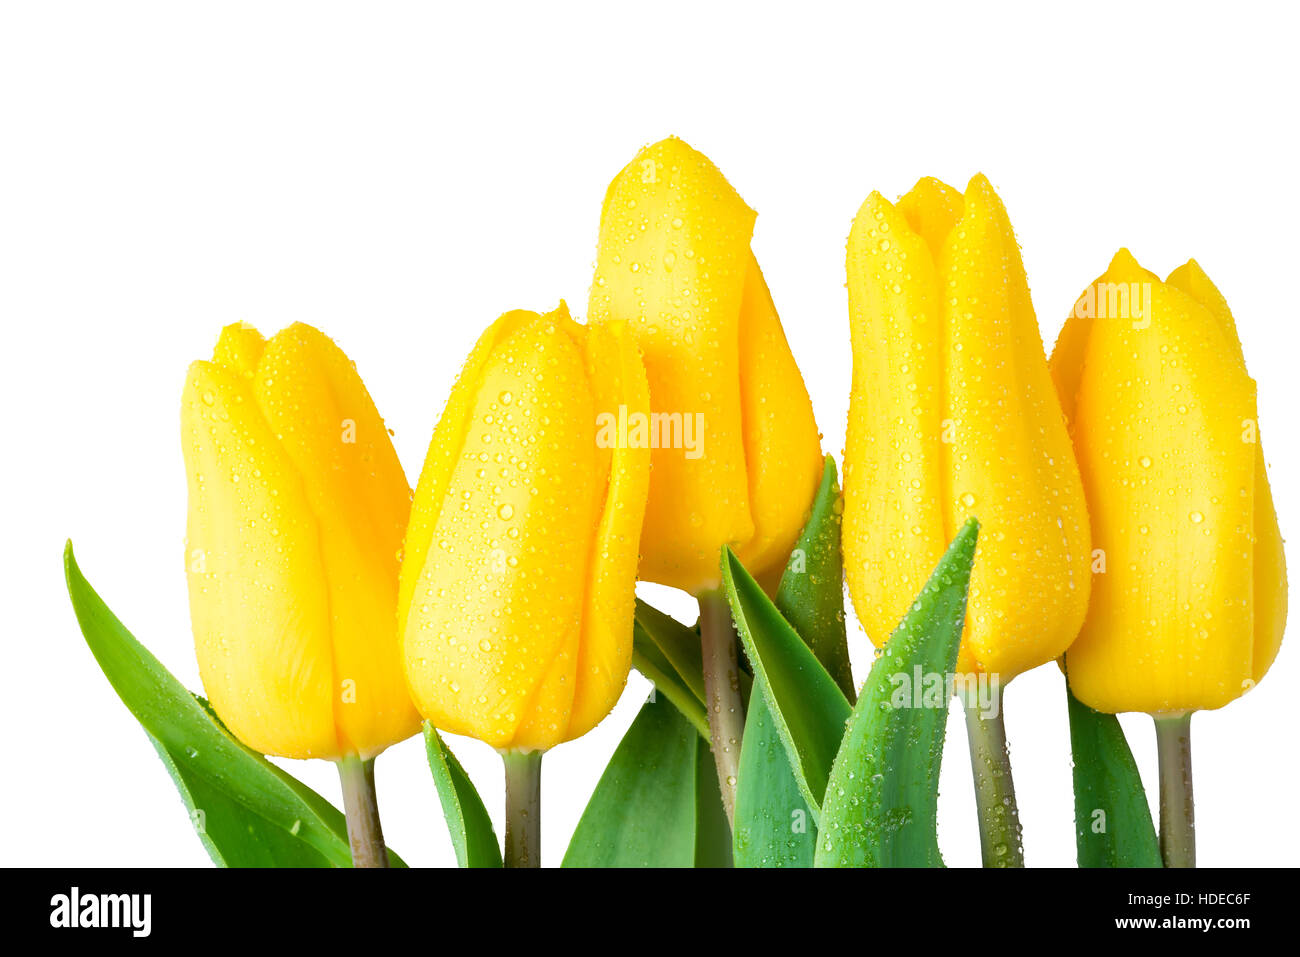 Wet fiori tulipani gialli su sfondo bianco closeup Foto Stock